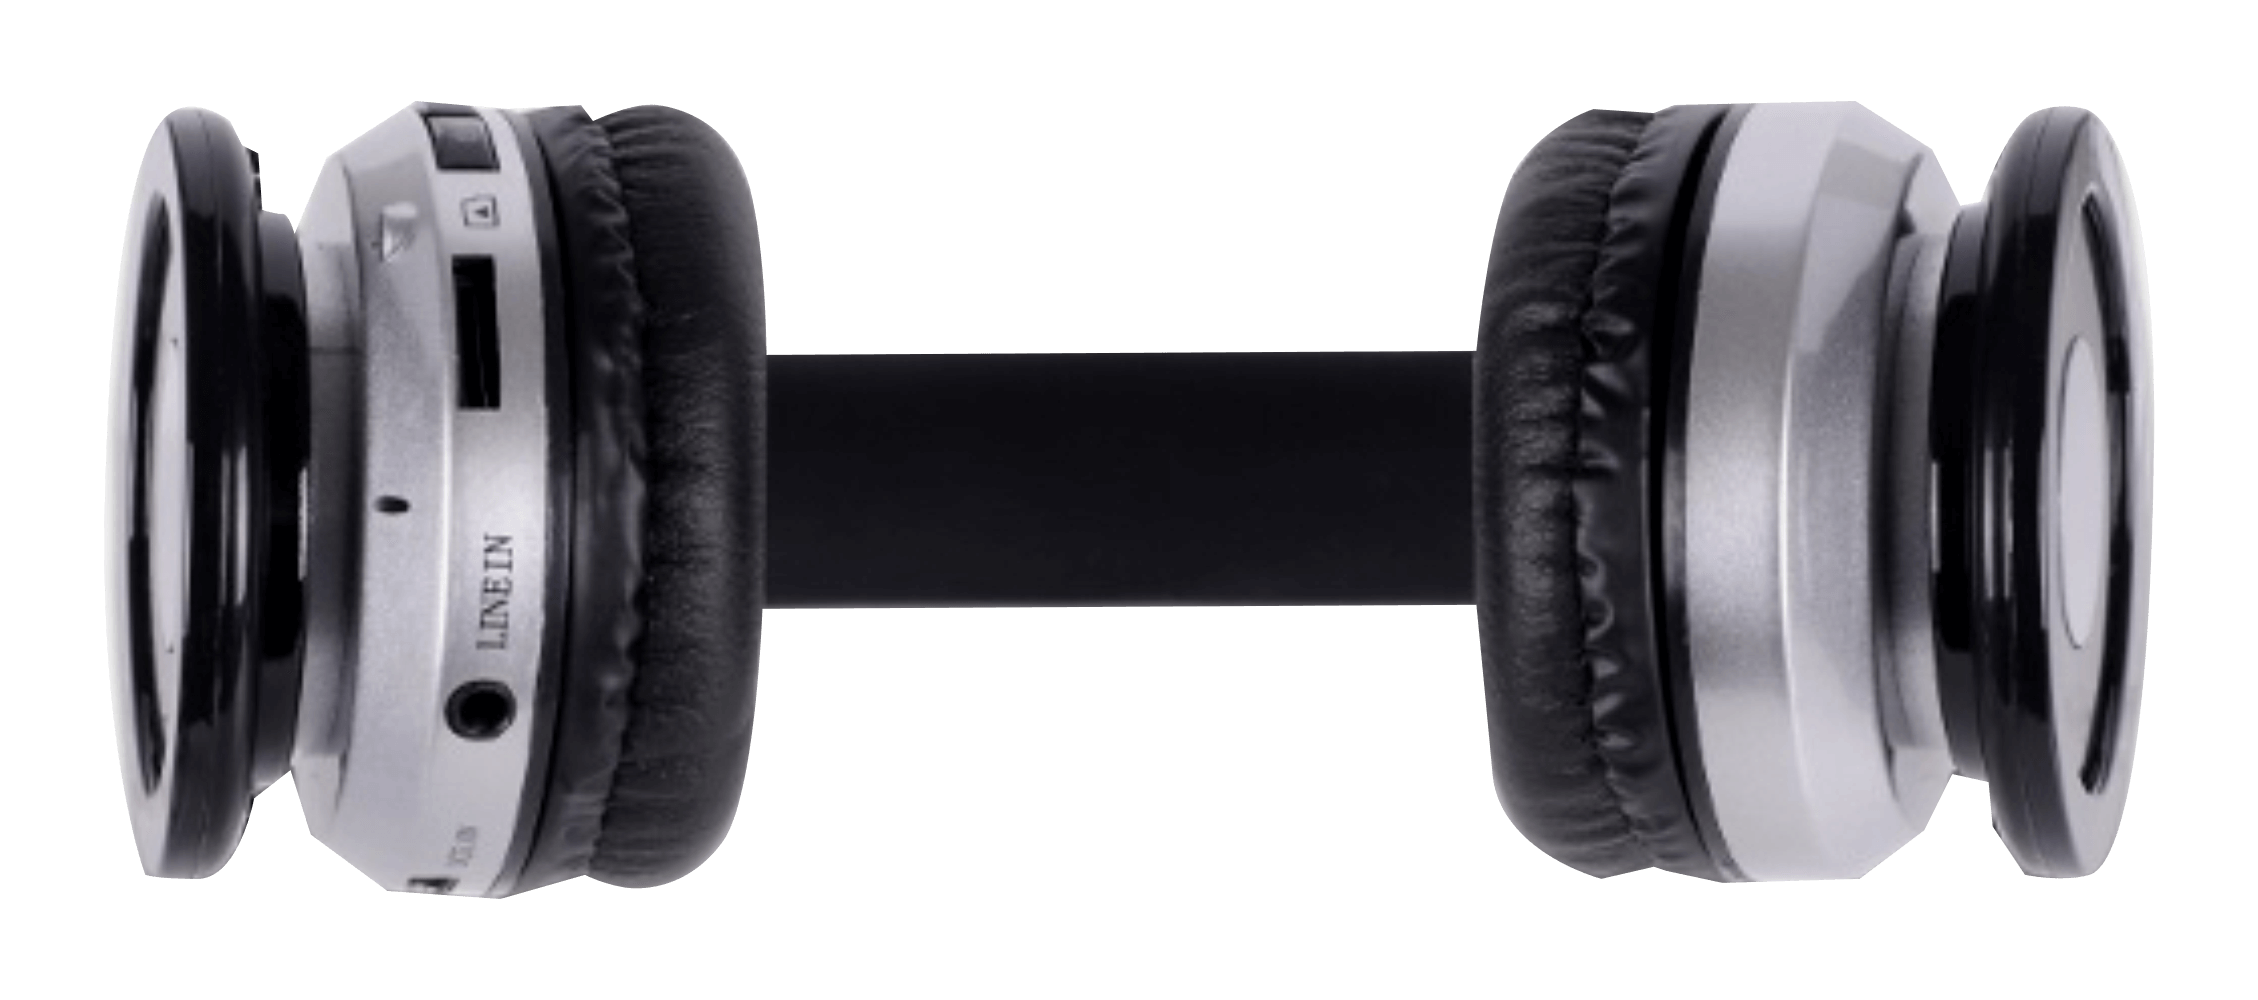 LG K8 2018 (K9) bluetooth fejhallgató Rebeltec Crystal fekete